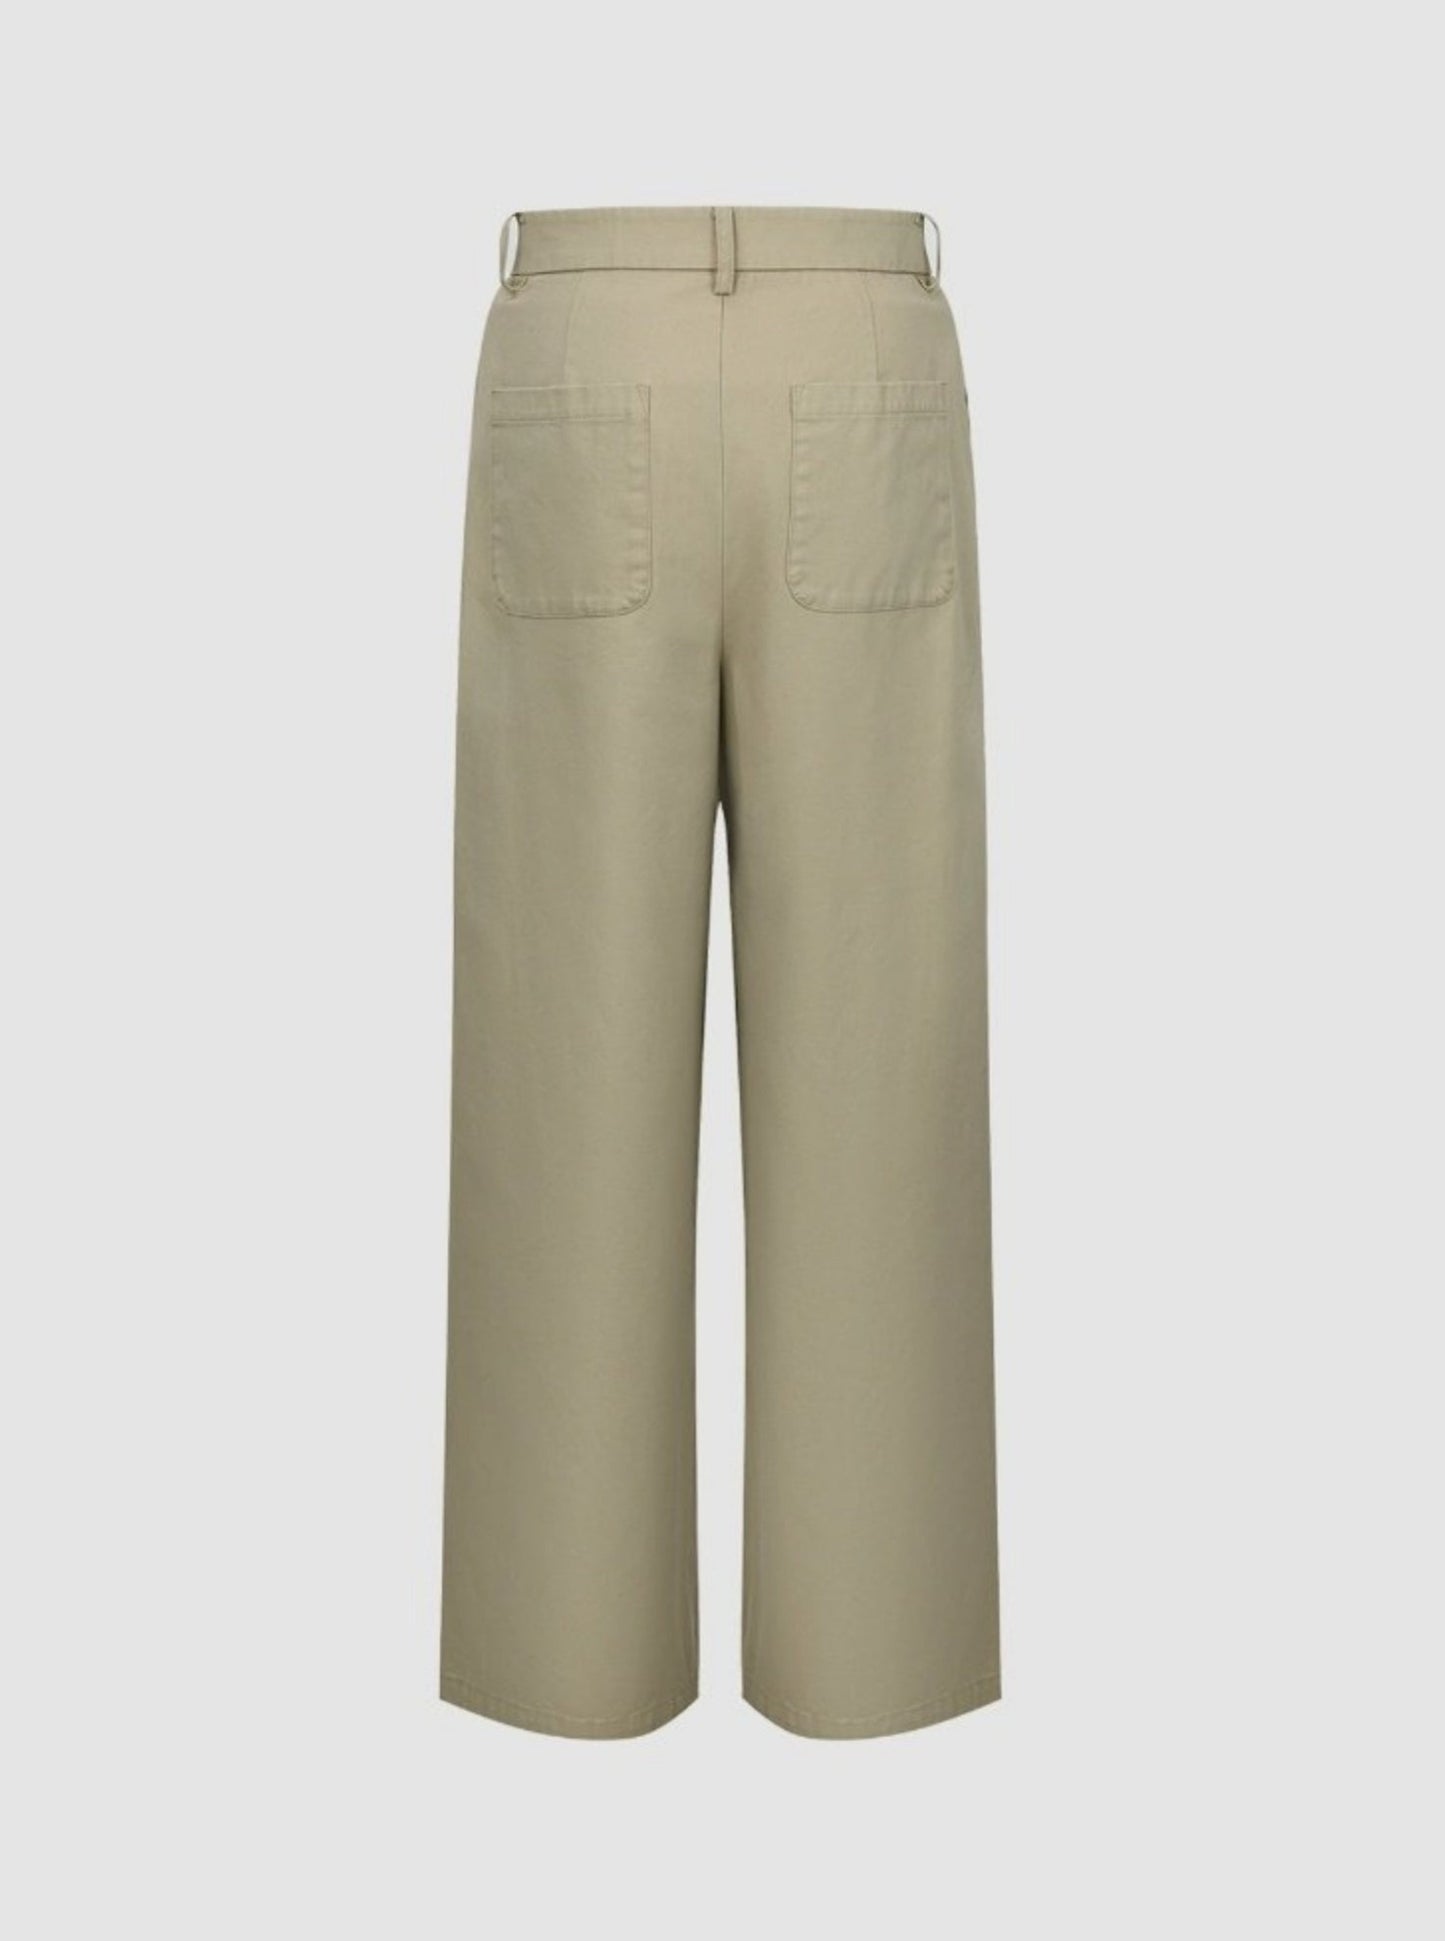 Micropleated Cotton Slimming Radish Pants